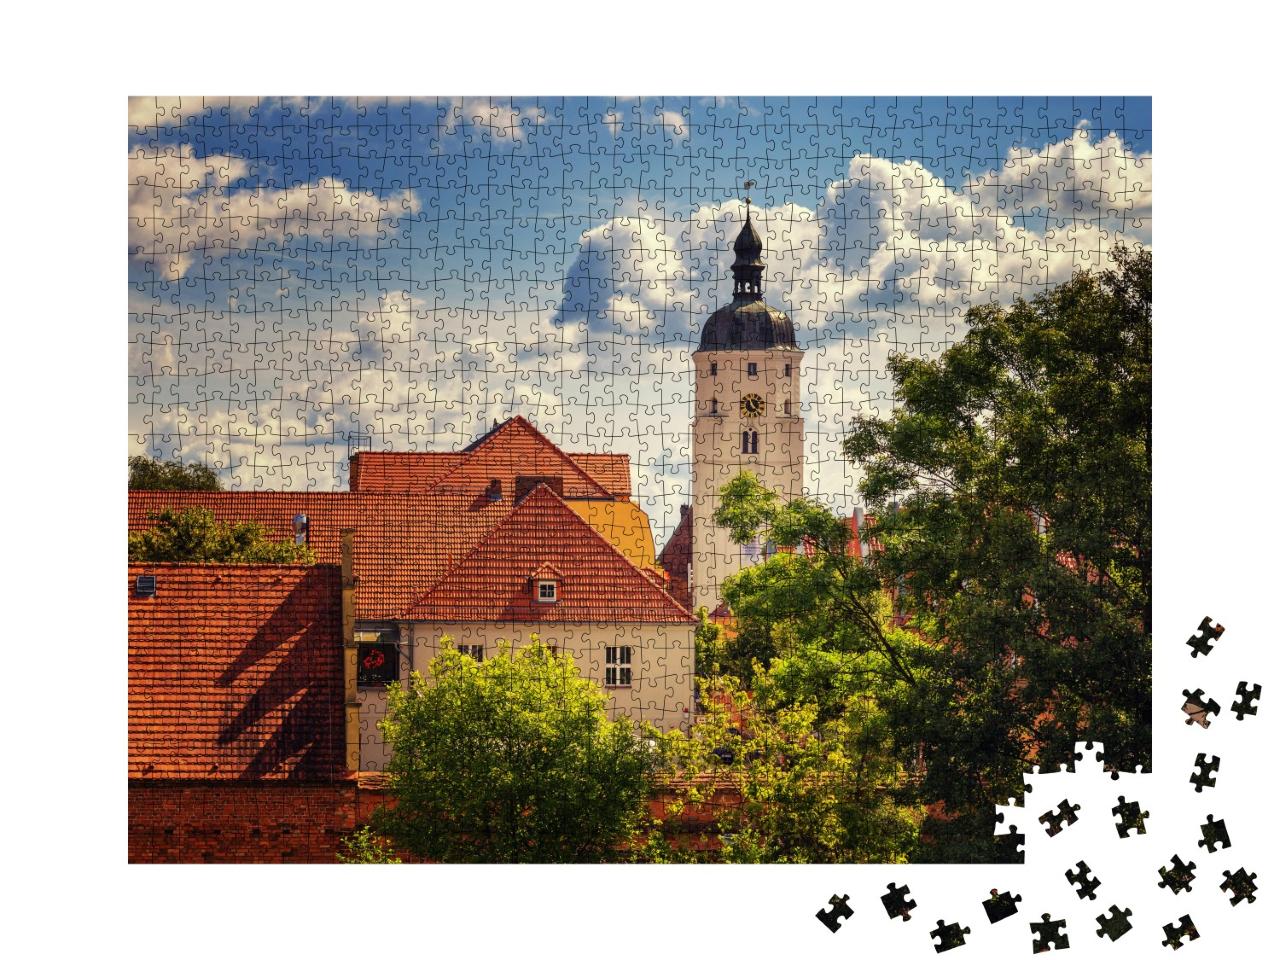 Puzzle 1000 Teile „Lübben, Spreewald“